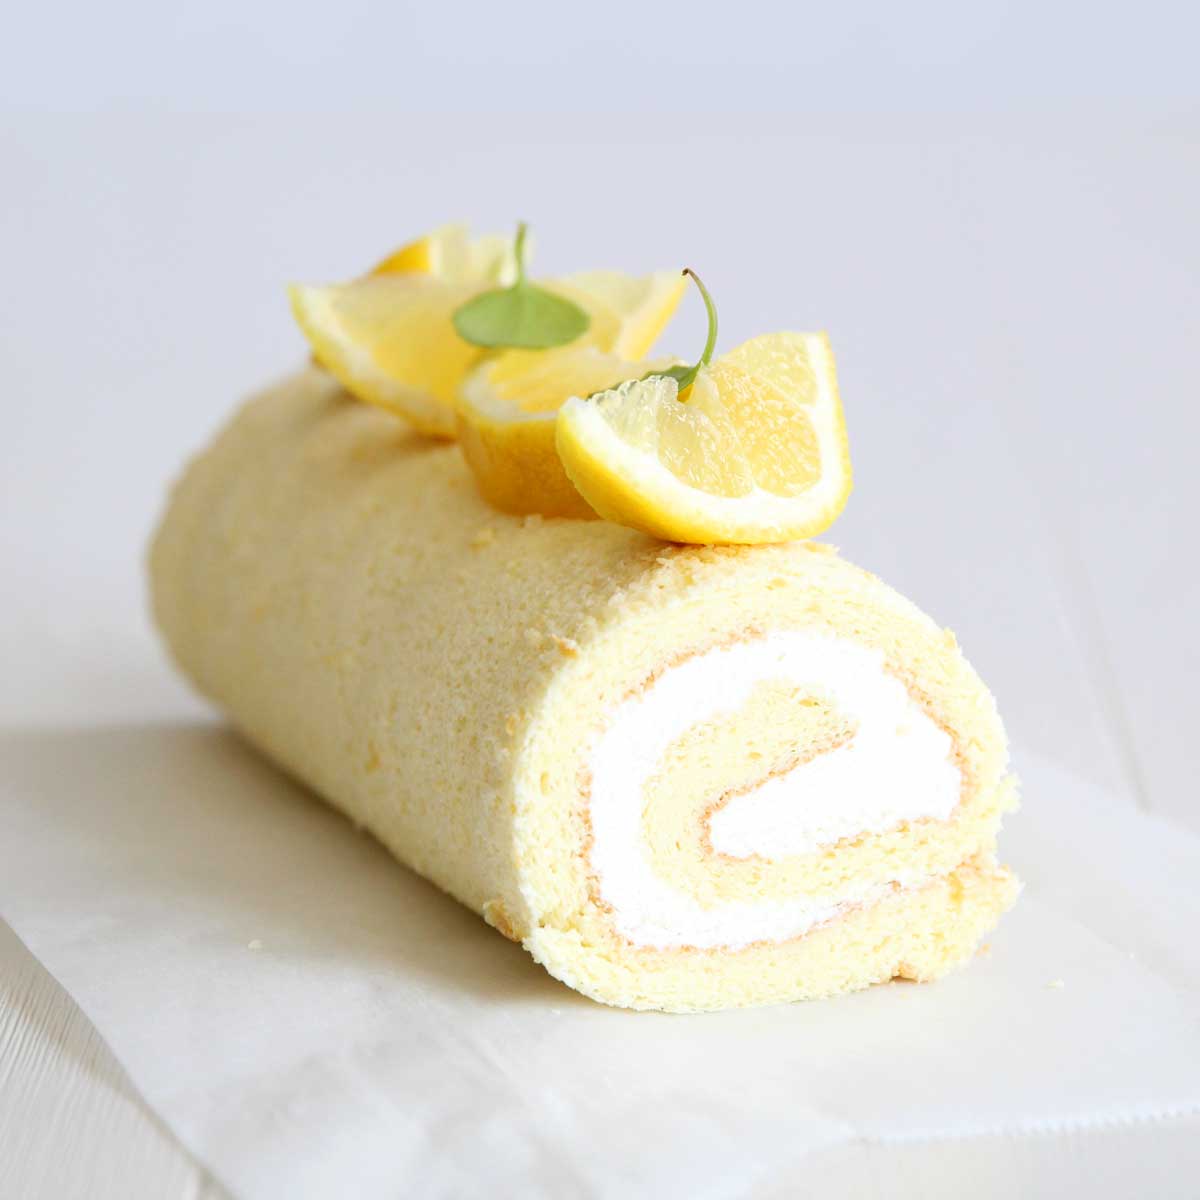 Gluten Free Lemon Roll Cake Recipe with Almond Flour - Strawberry Japanese Roll Cake